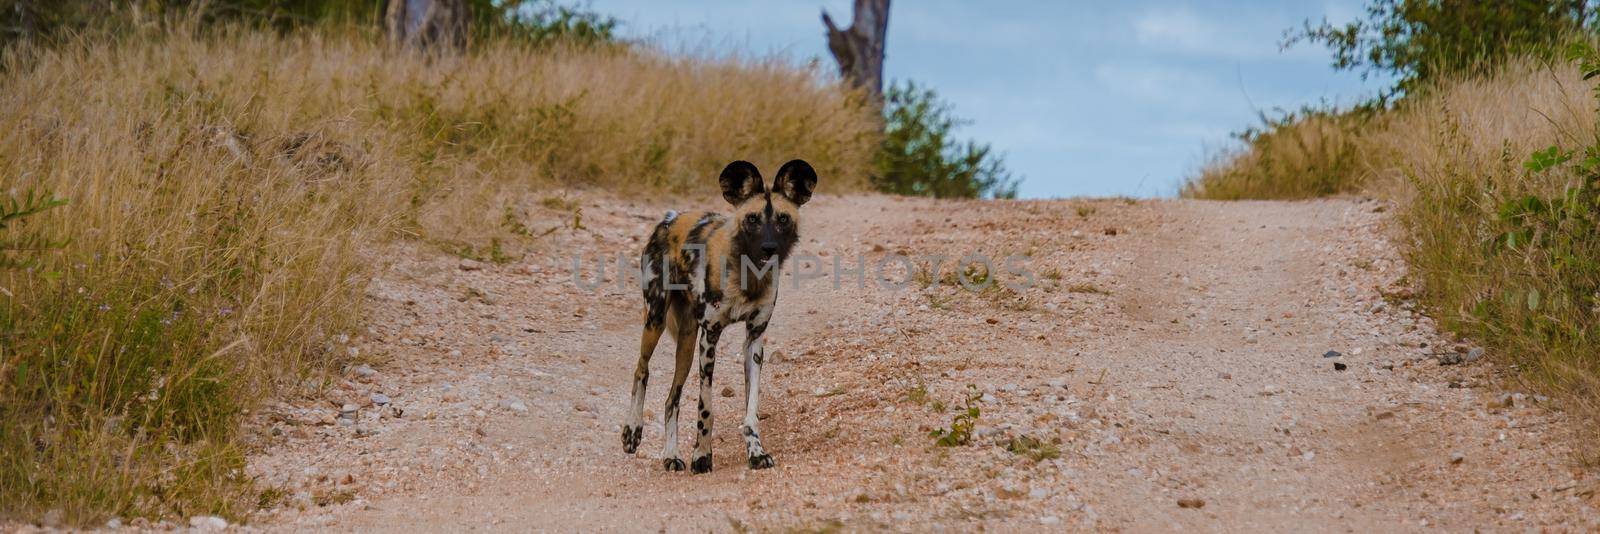 African wild dog during safari game drive in Kruger national park South Africa by fokkebok